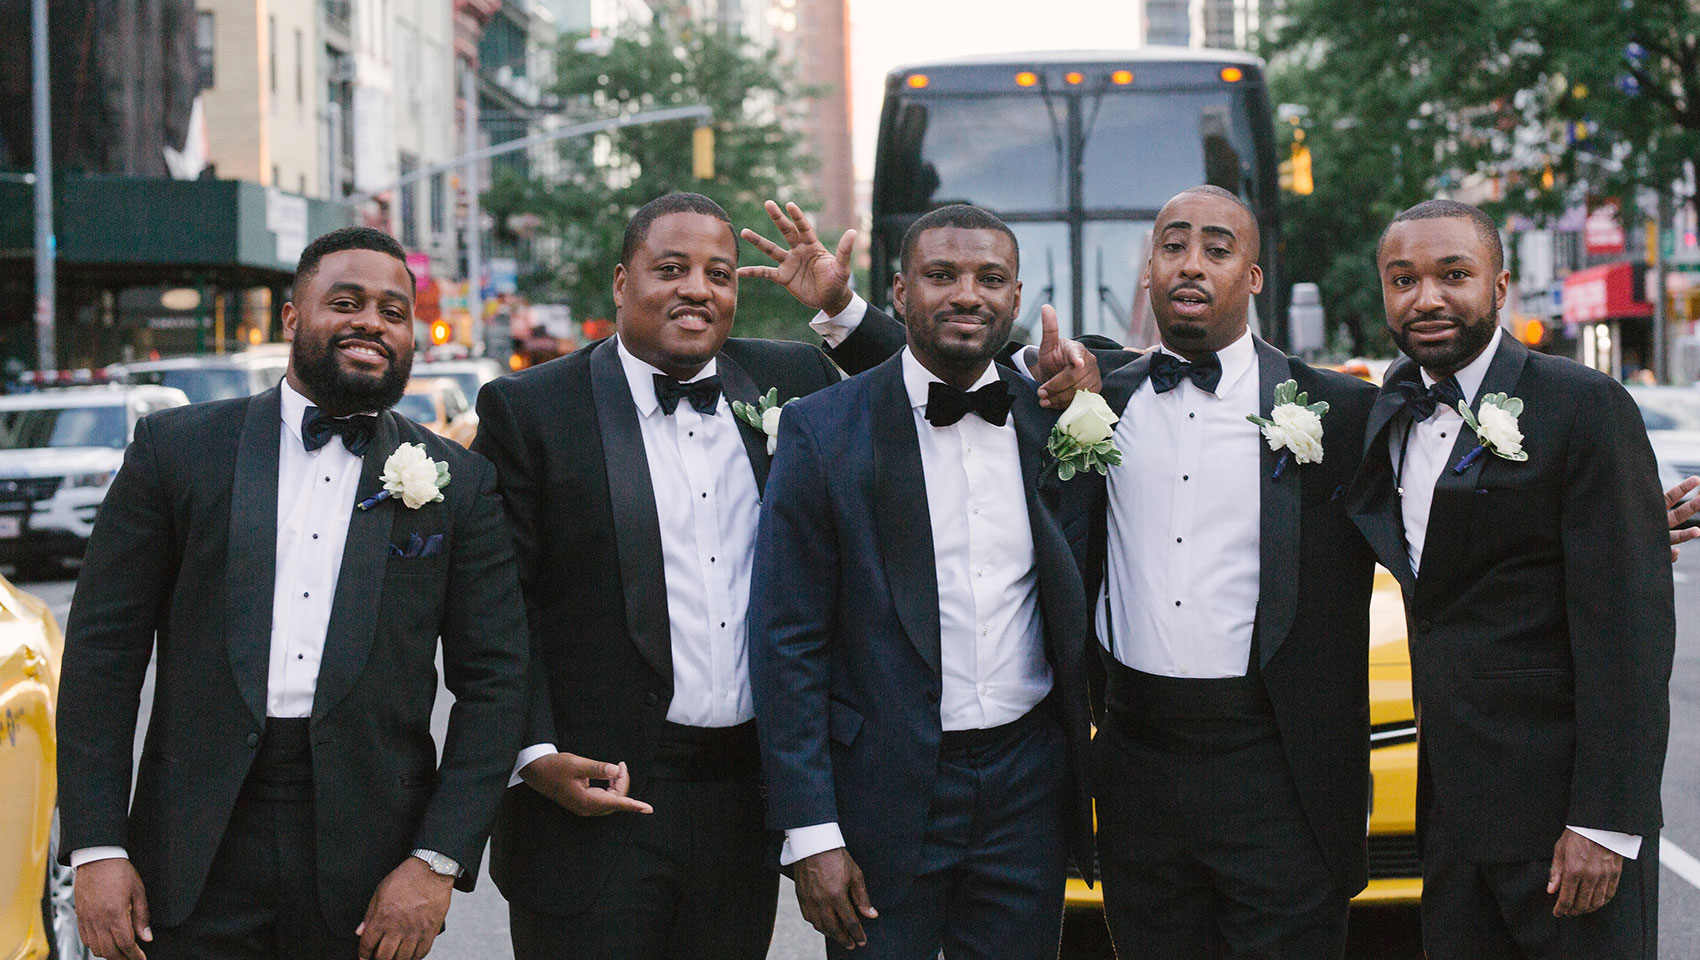 Daniel with his groomsmen in tuxedos on street crosswalk